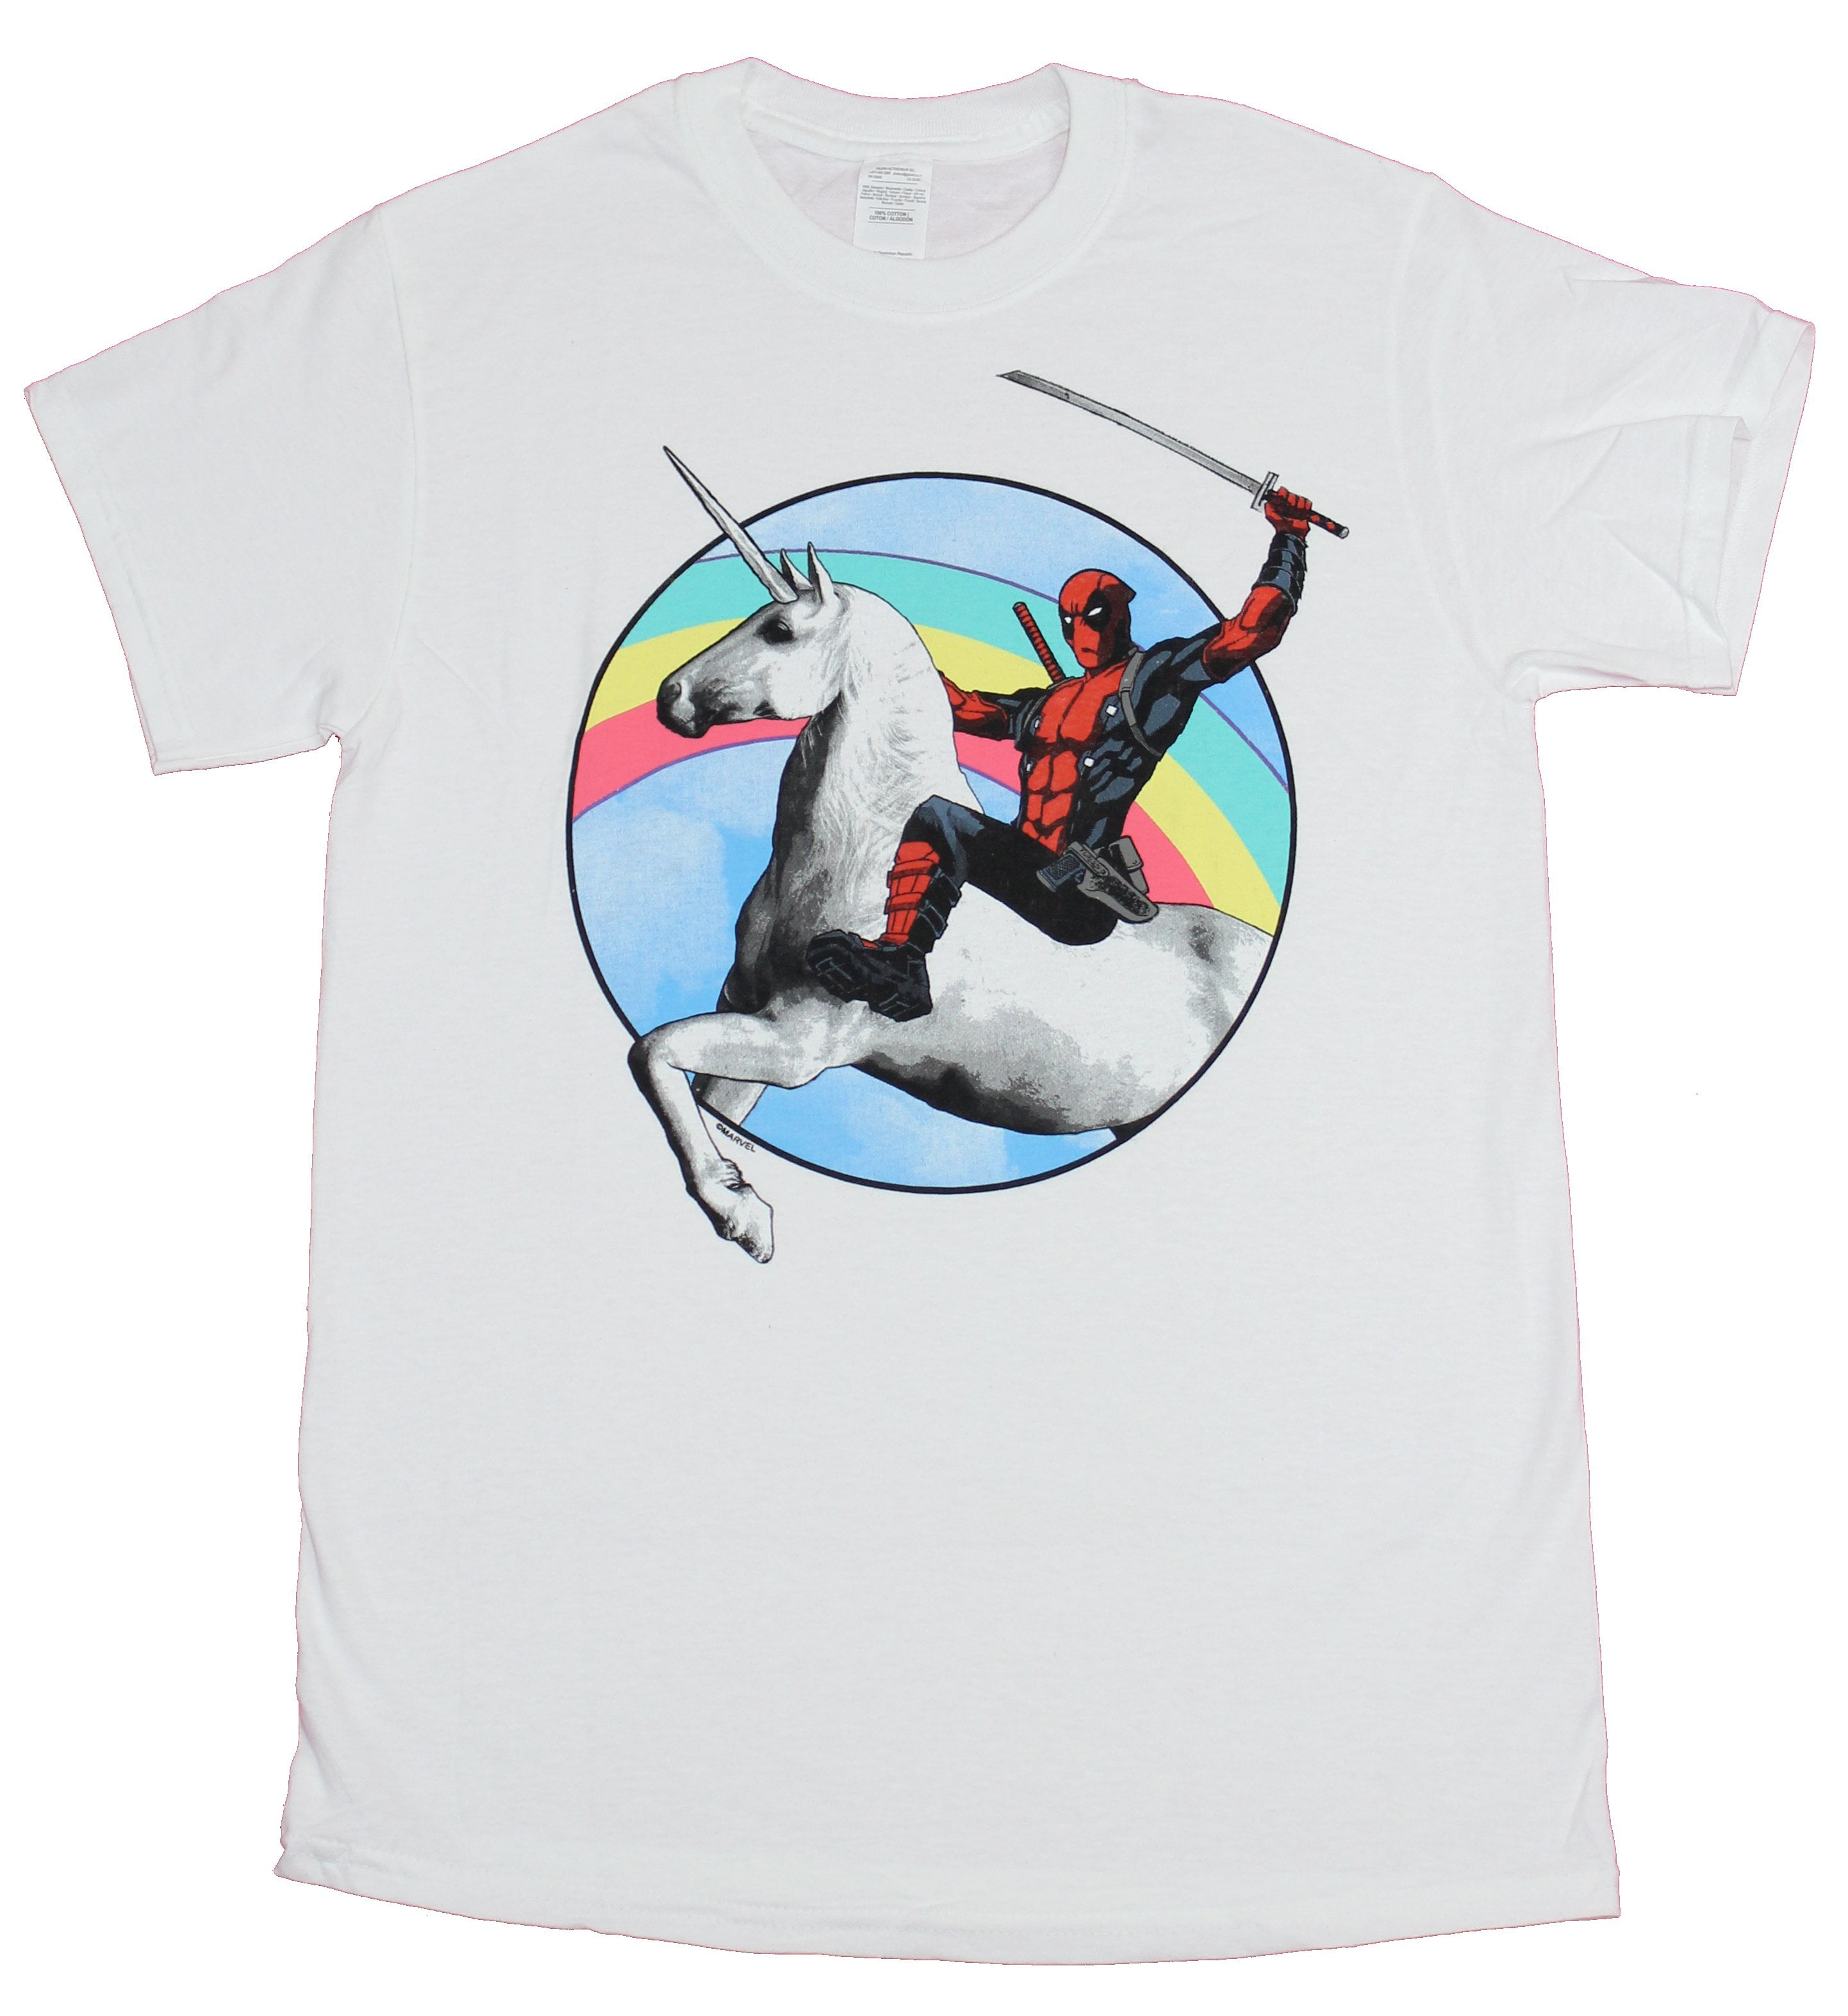 Deadpool Unicorn Funny Rainbow Marvel Tee Kids Boys Graphic T-Shirt 